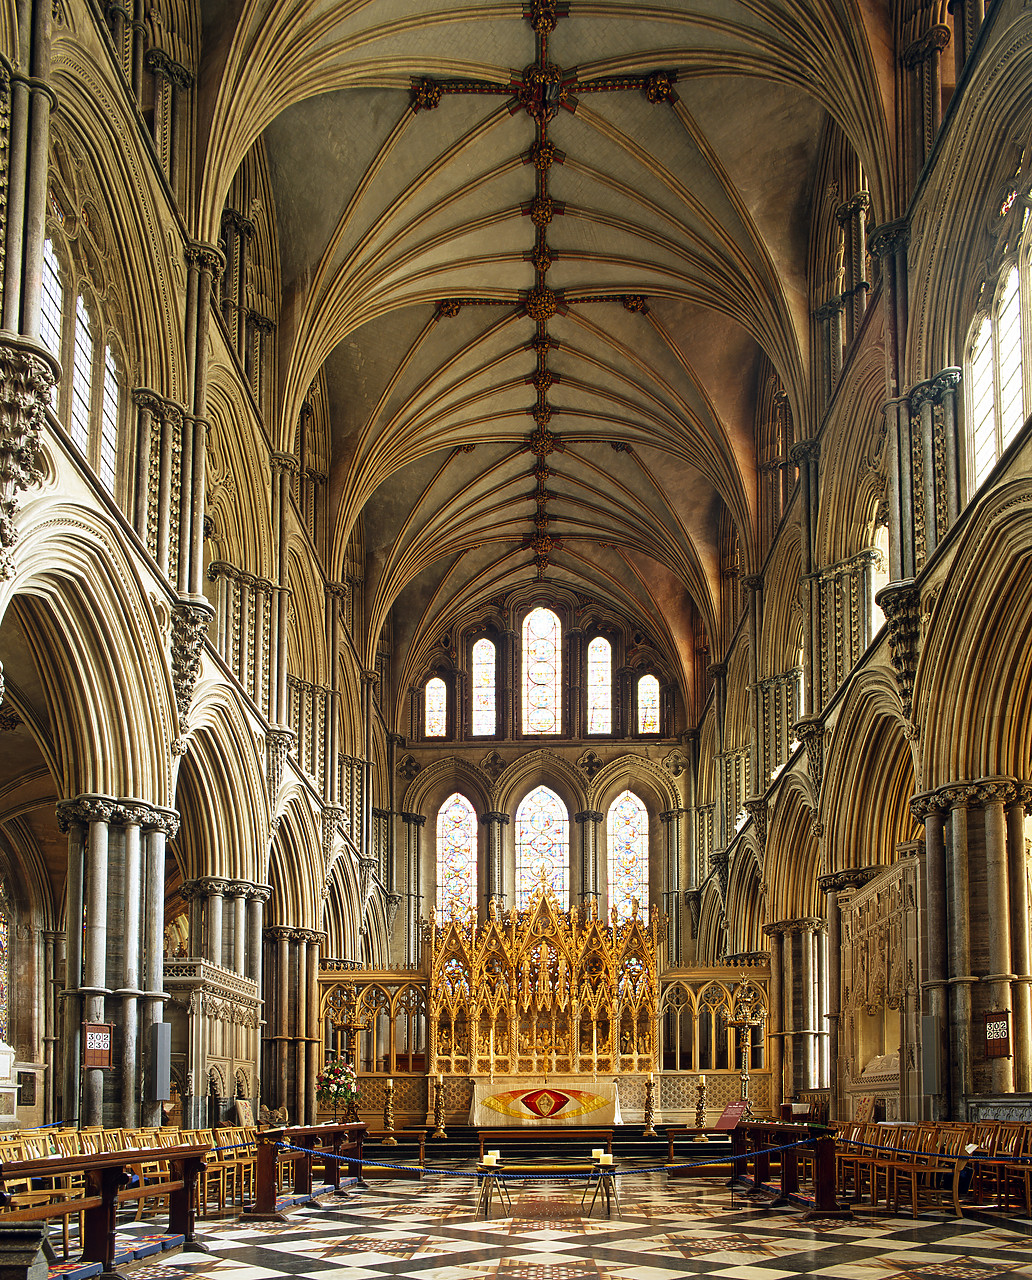 #010770-3 - Ely Cathedral Interior, Ely, Cambridgeshire, England